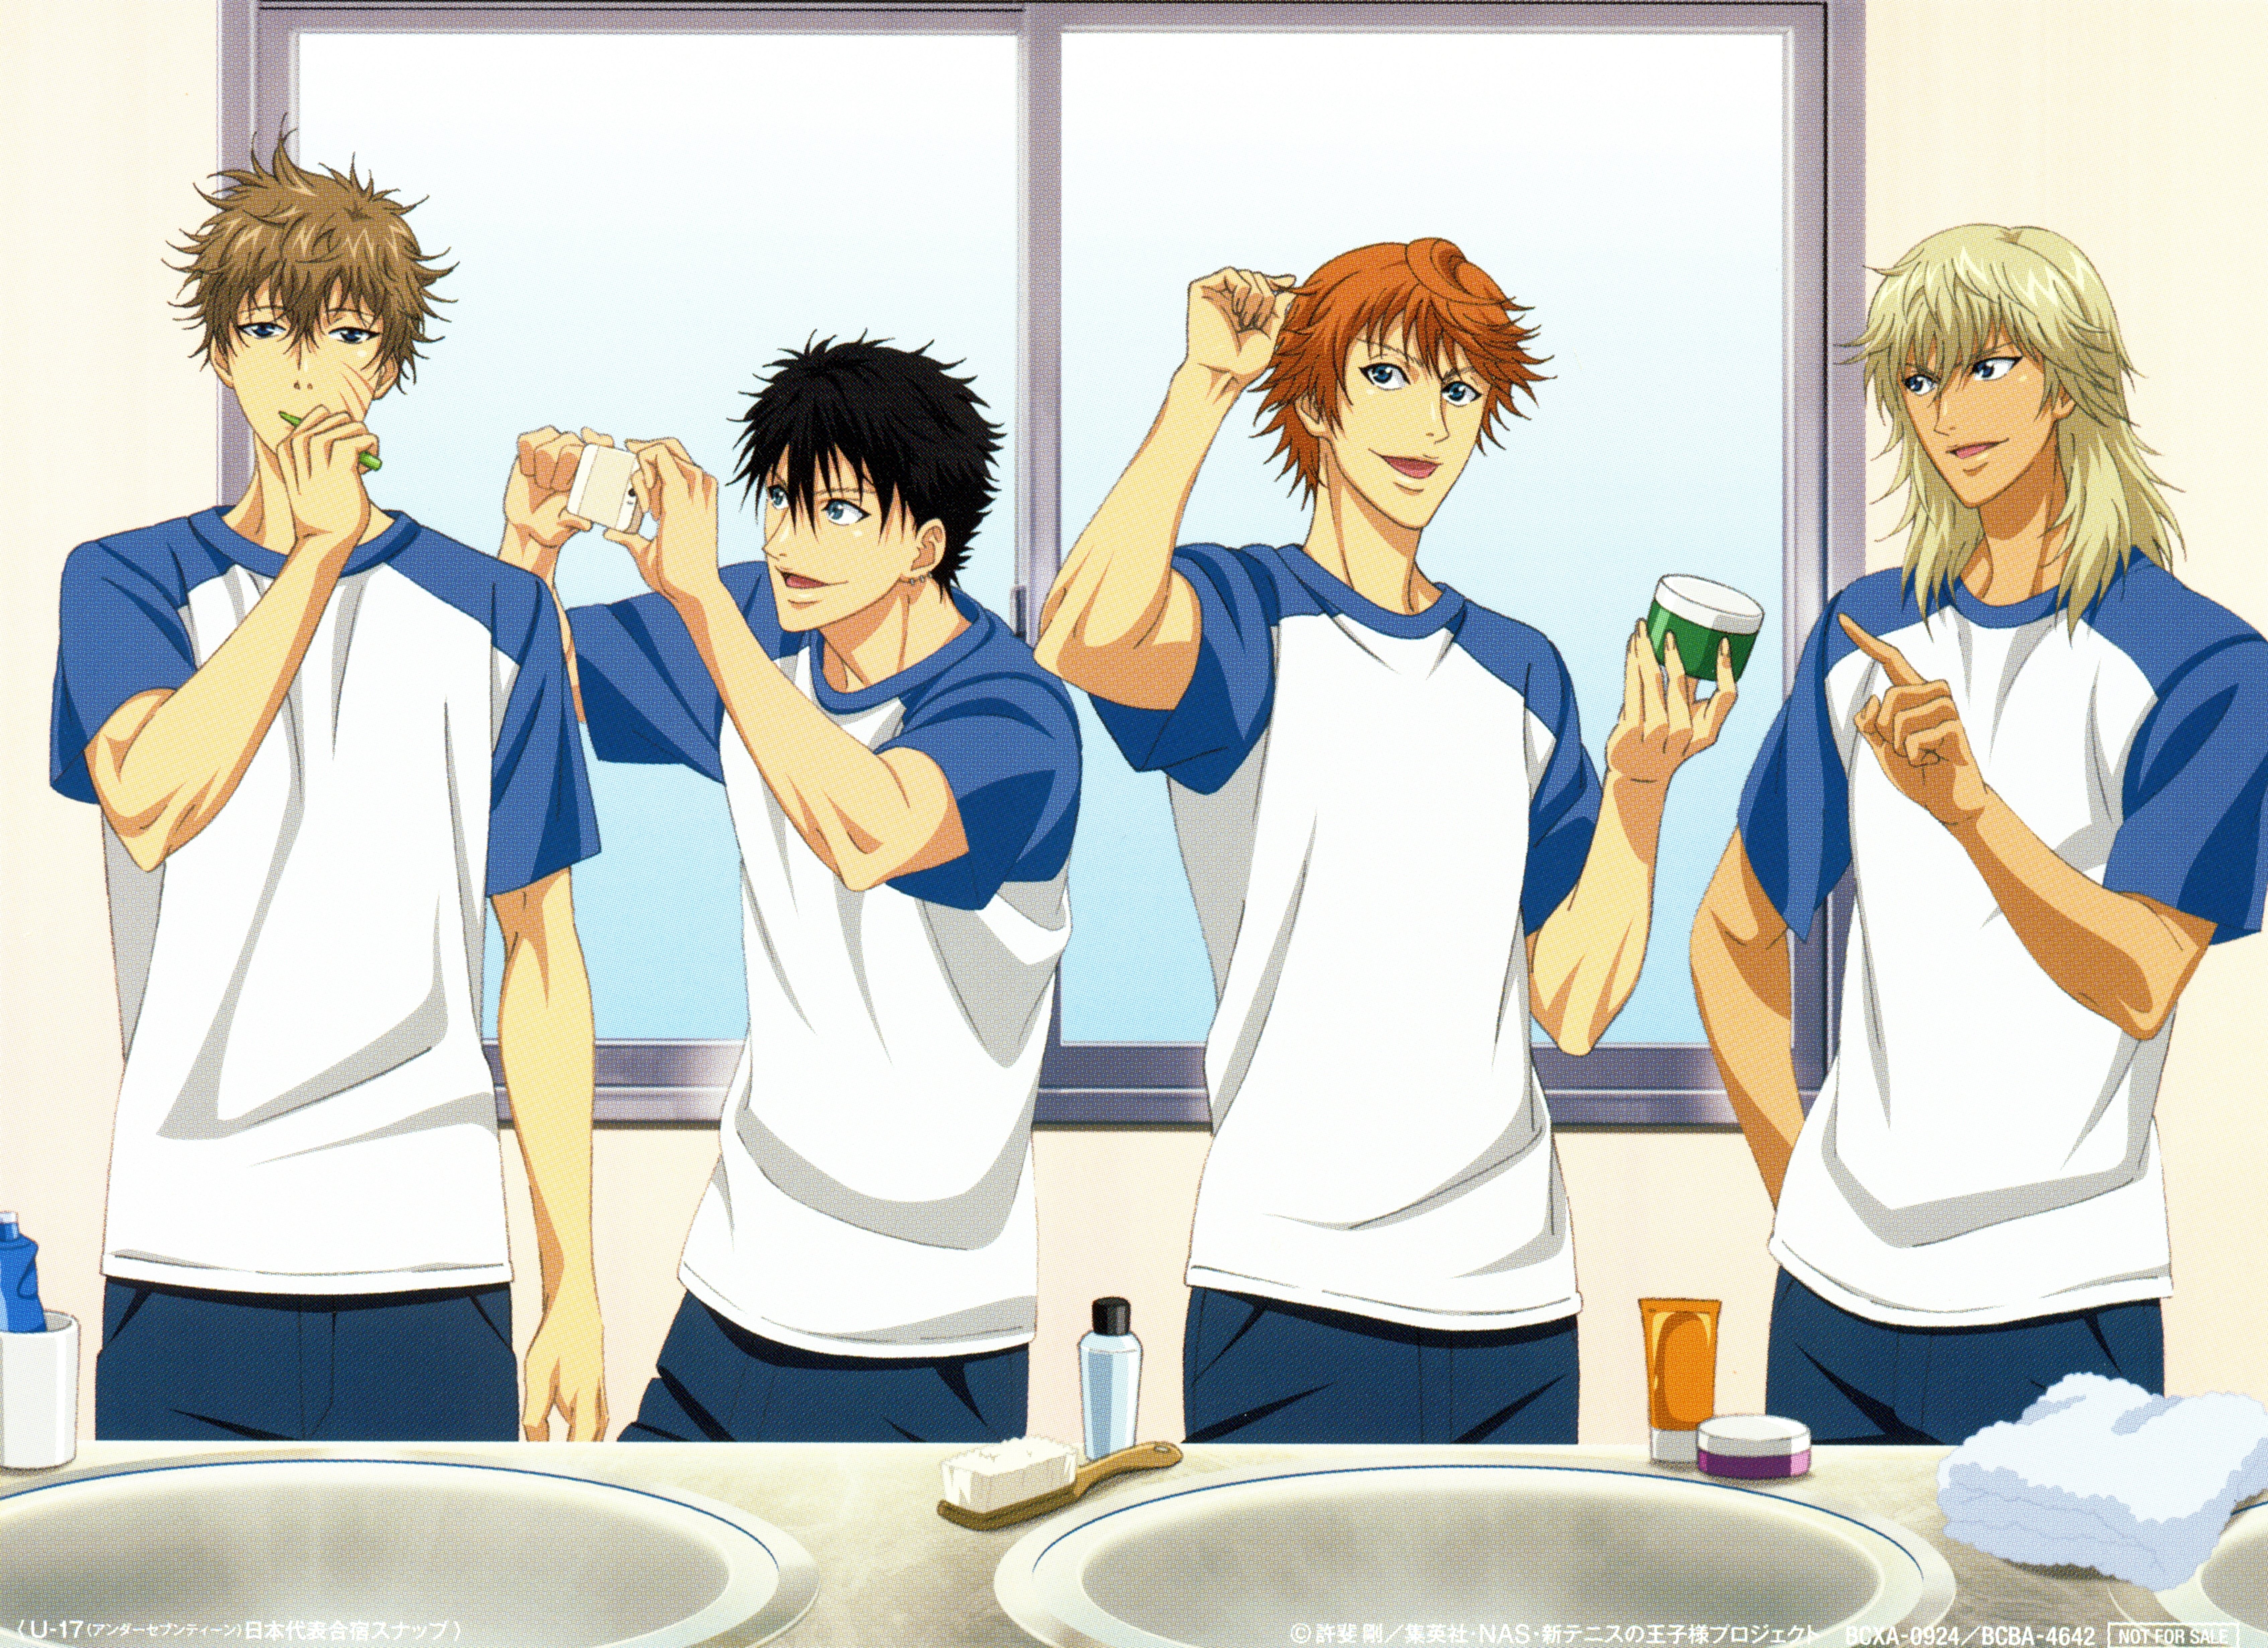  anime  Boys  Sport  Group Prince Of Tennis Series 